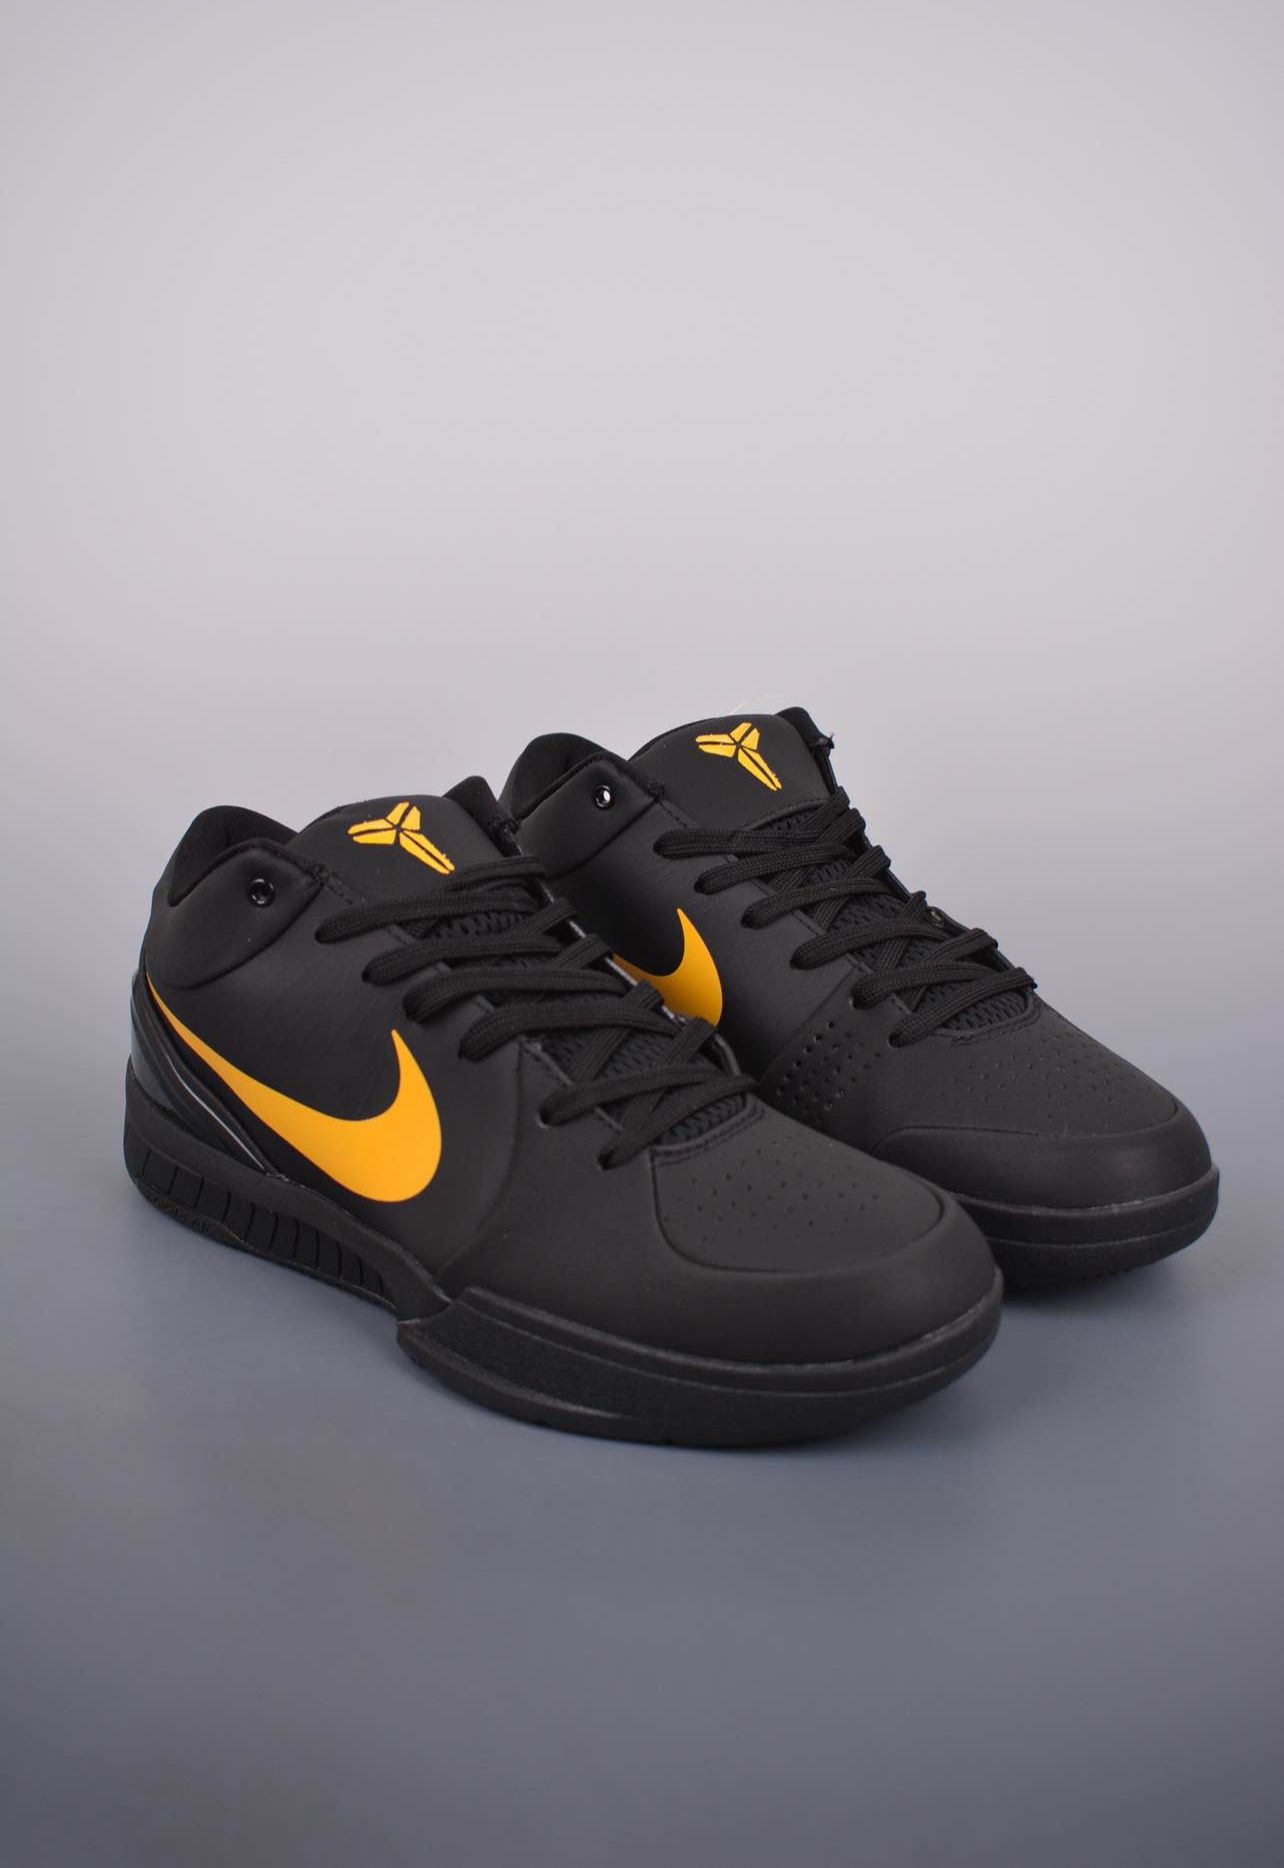 Nike Kobe 4 Protro “Black Mamba” Black University Gold FQ3544-001